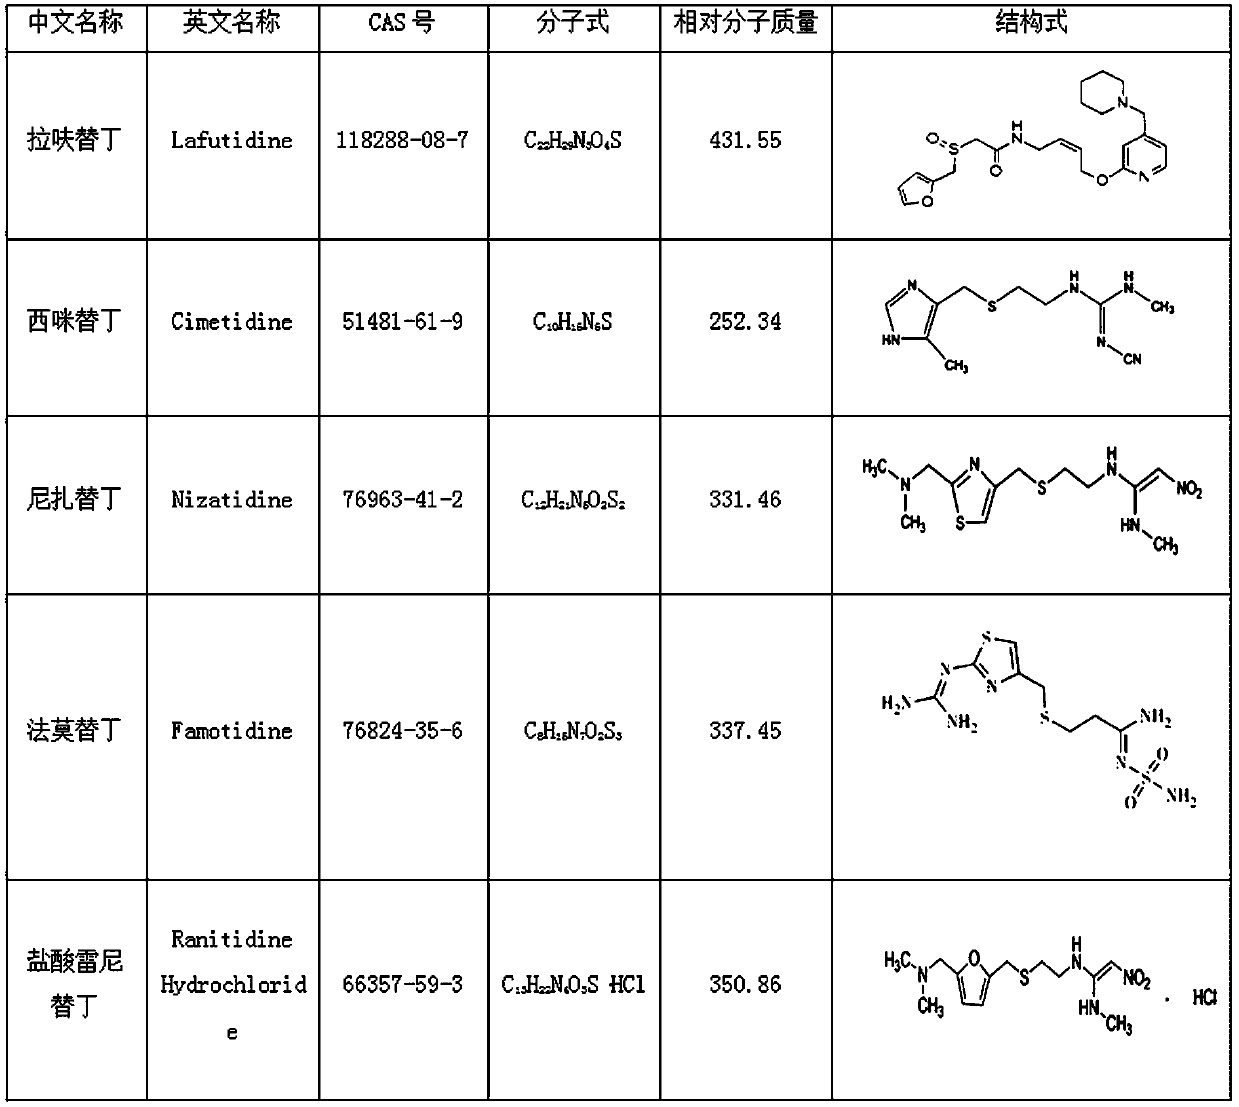 Method for detecting ranitidine hydrochloride, cimetidine, famotidine, nizatidine and lafutidine